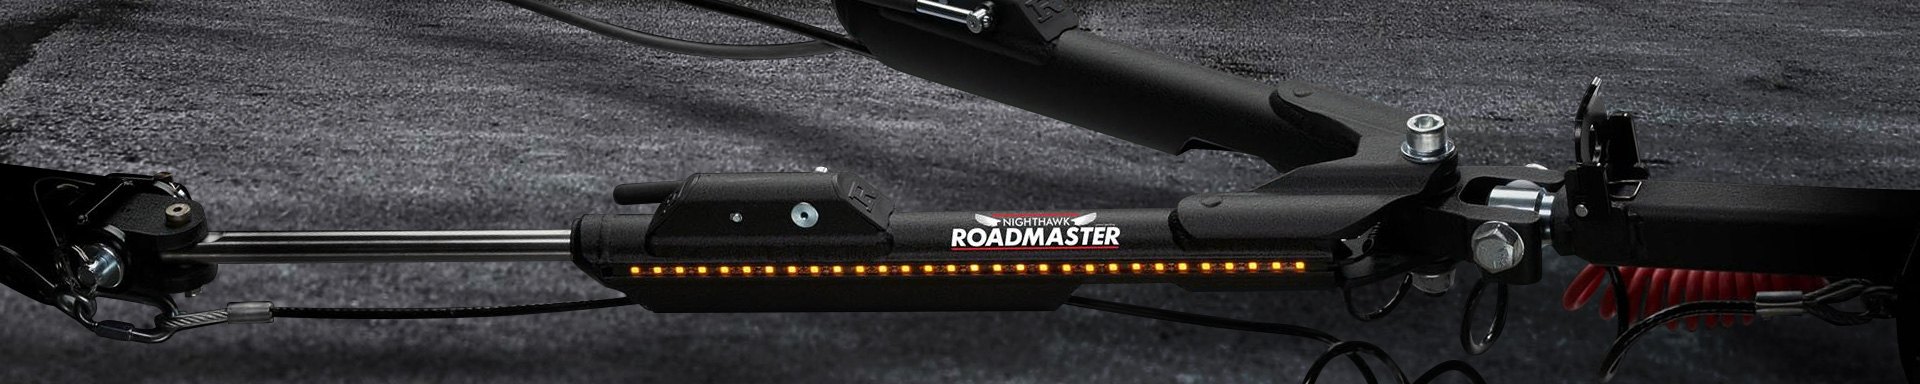 Roadmaster Diagnostic & Testing Tools